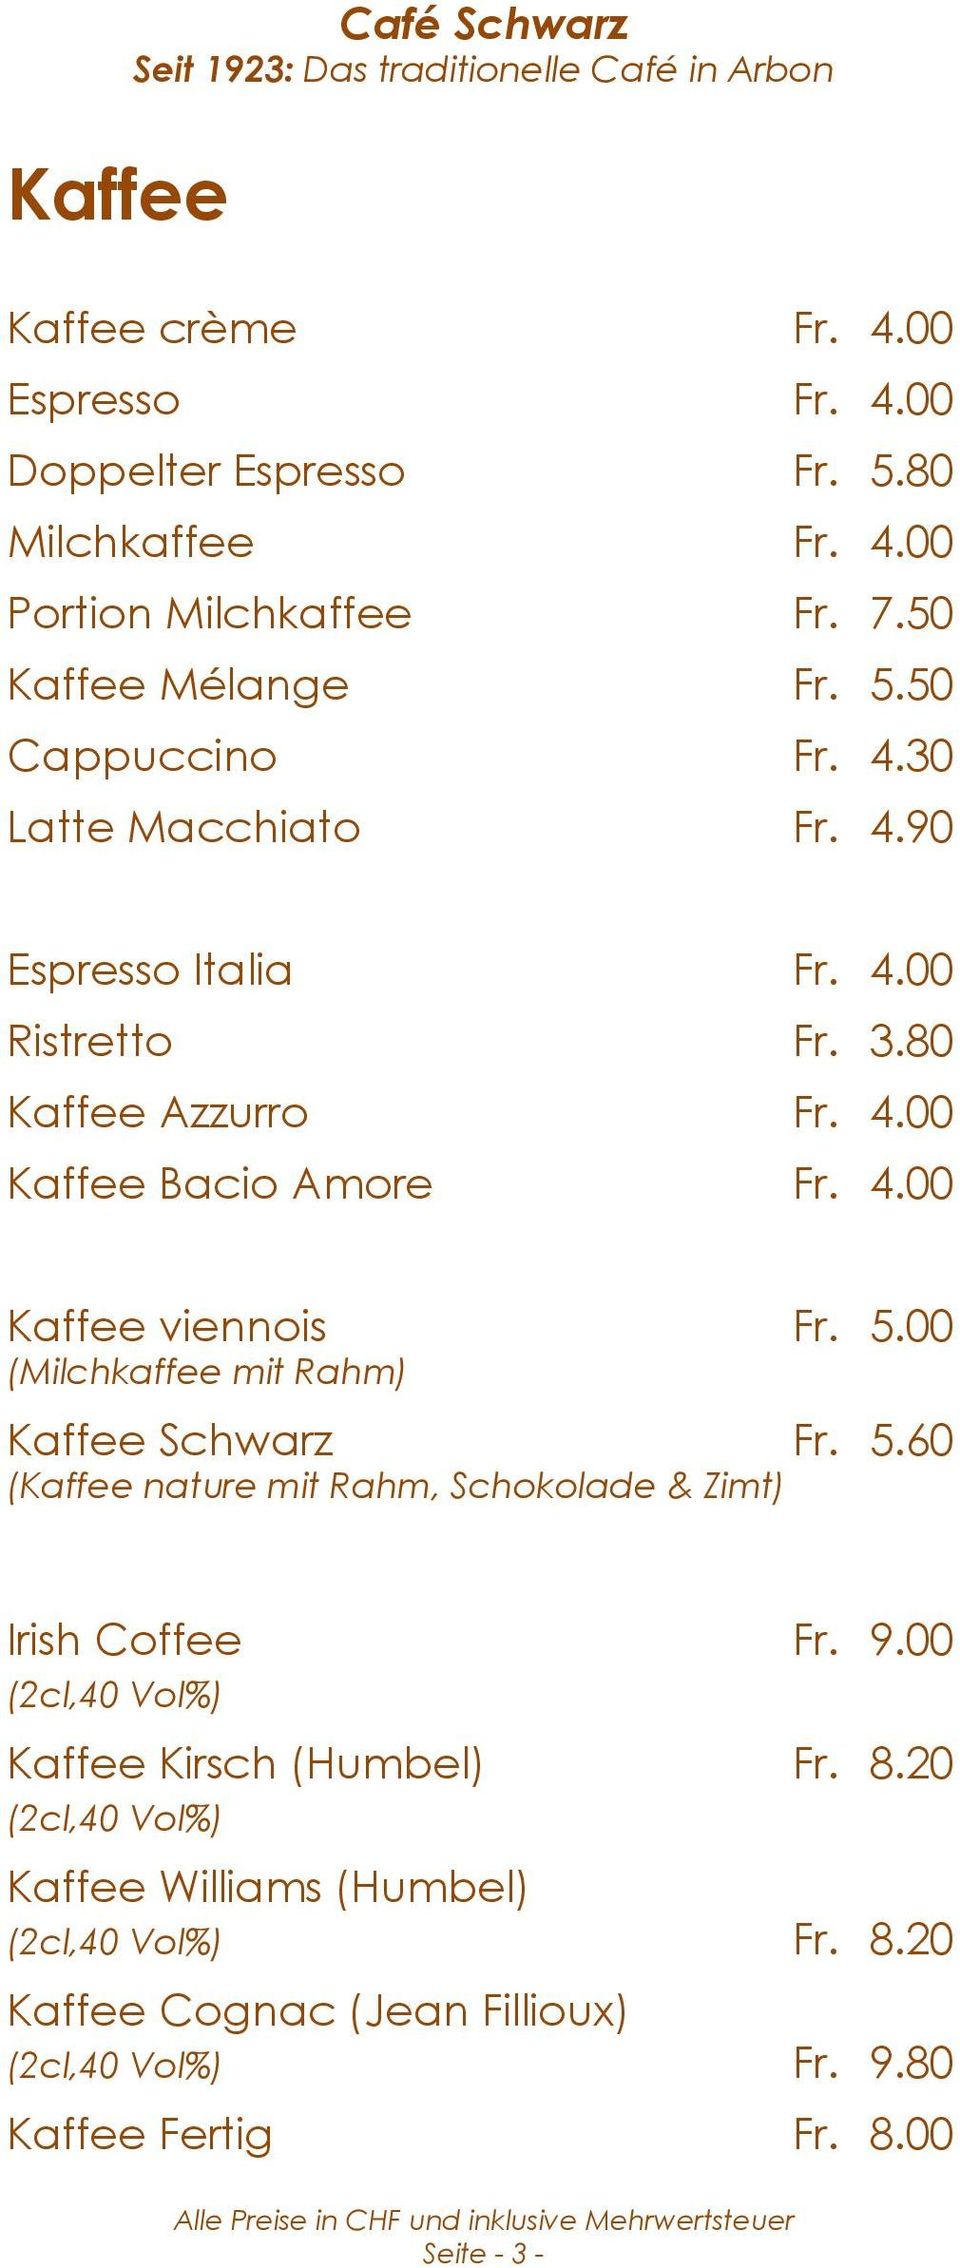 00 (Milchkaffee mit Rahm) Kaffee Schwarz Fr. 5.60 (Kaffee nature mit Rahm, Schokolade & Zimt) Irish Coffee Fr. 9.00 (2cl,40 Vol%) Kaffee Kirsch (Humbel) Fr. 8.